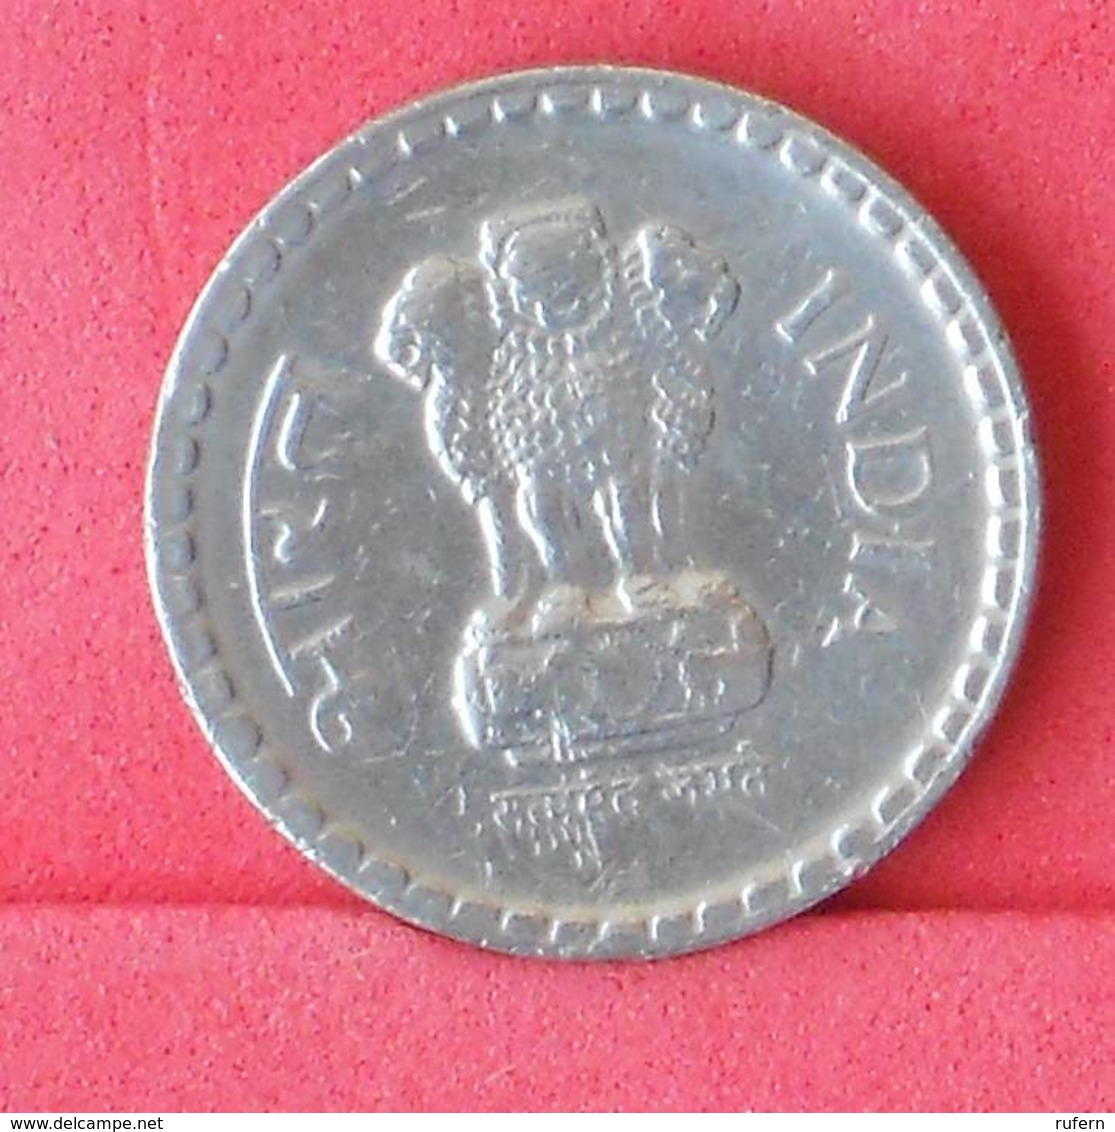 INDIA 5 RUPEES 2001 -    KM# 154,1 - (Nº29952) - India